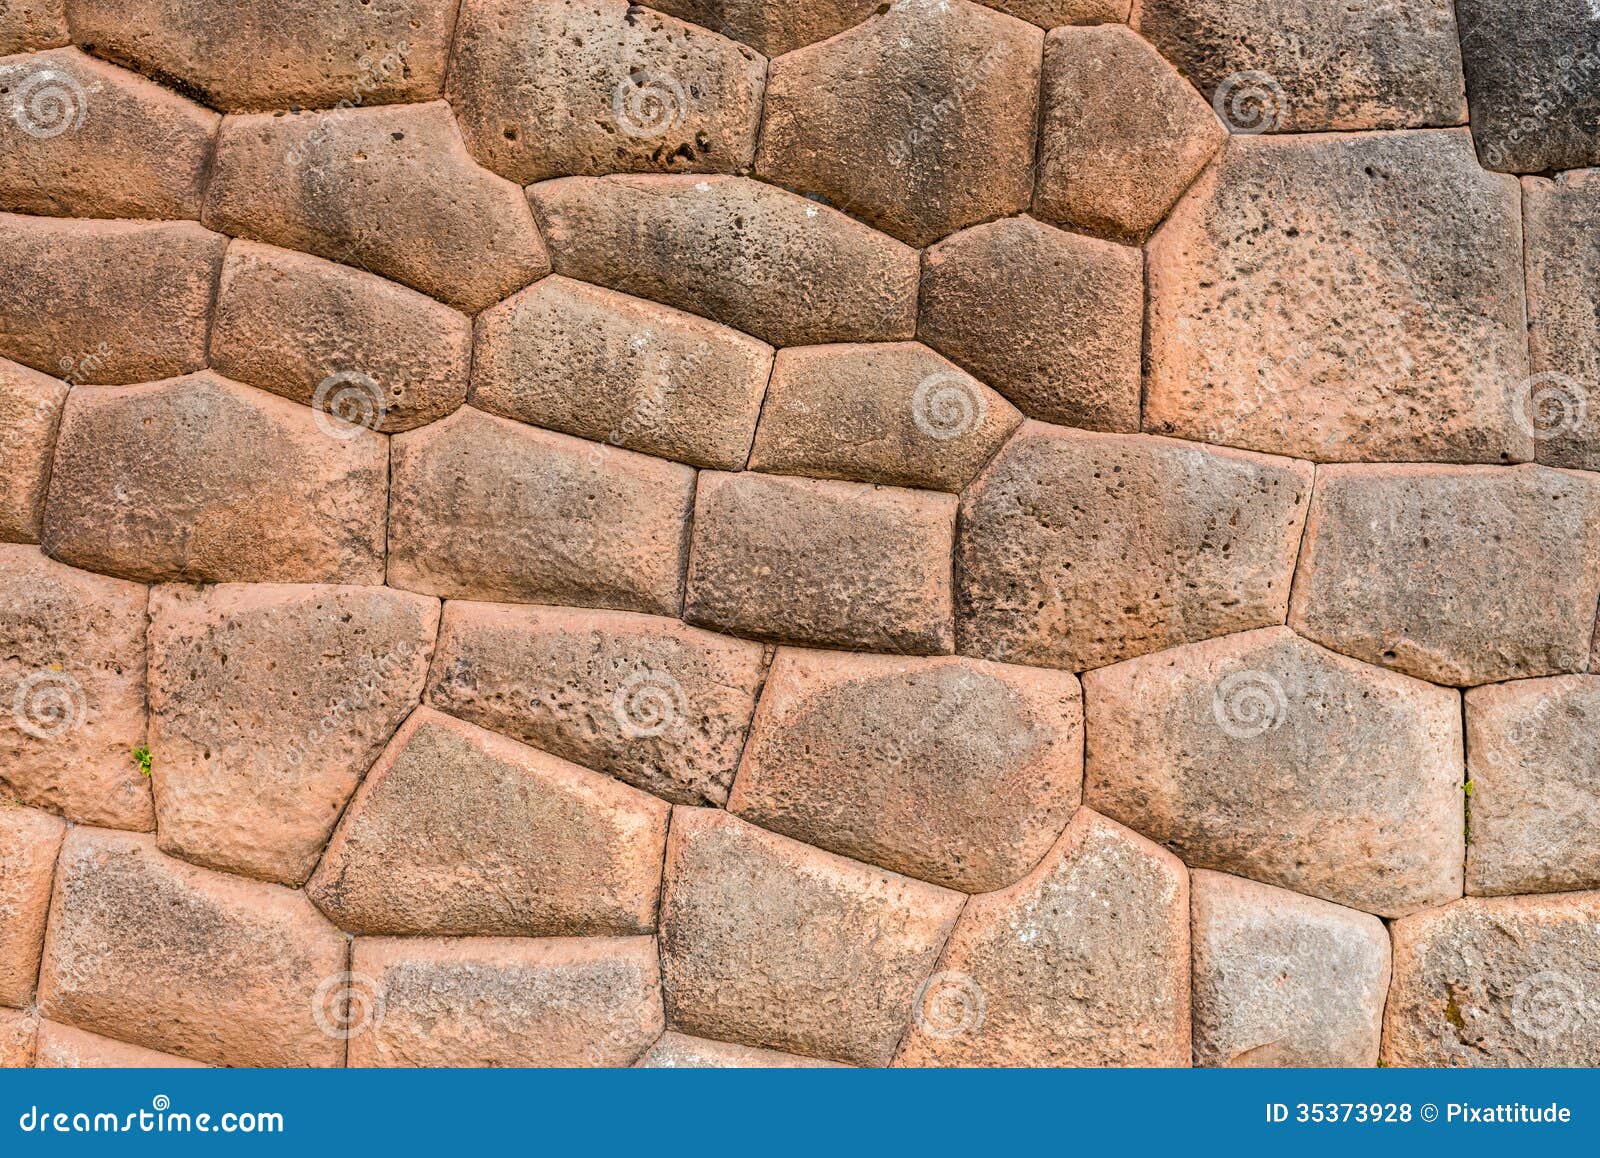 stone wall chincheros town peruvian andes cuzco peru